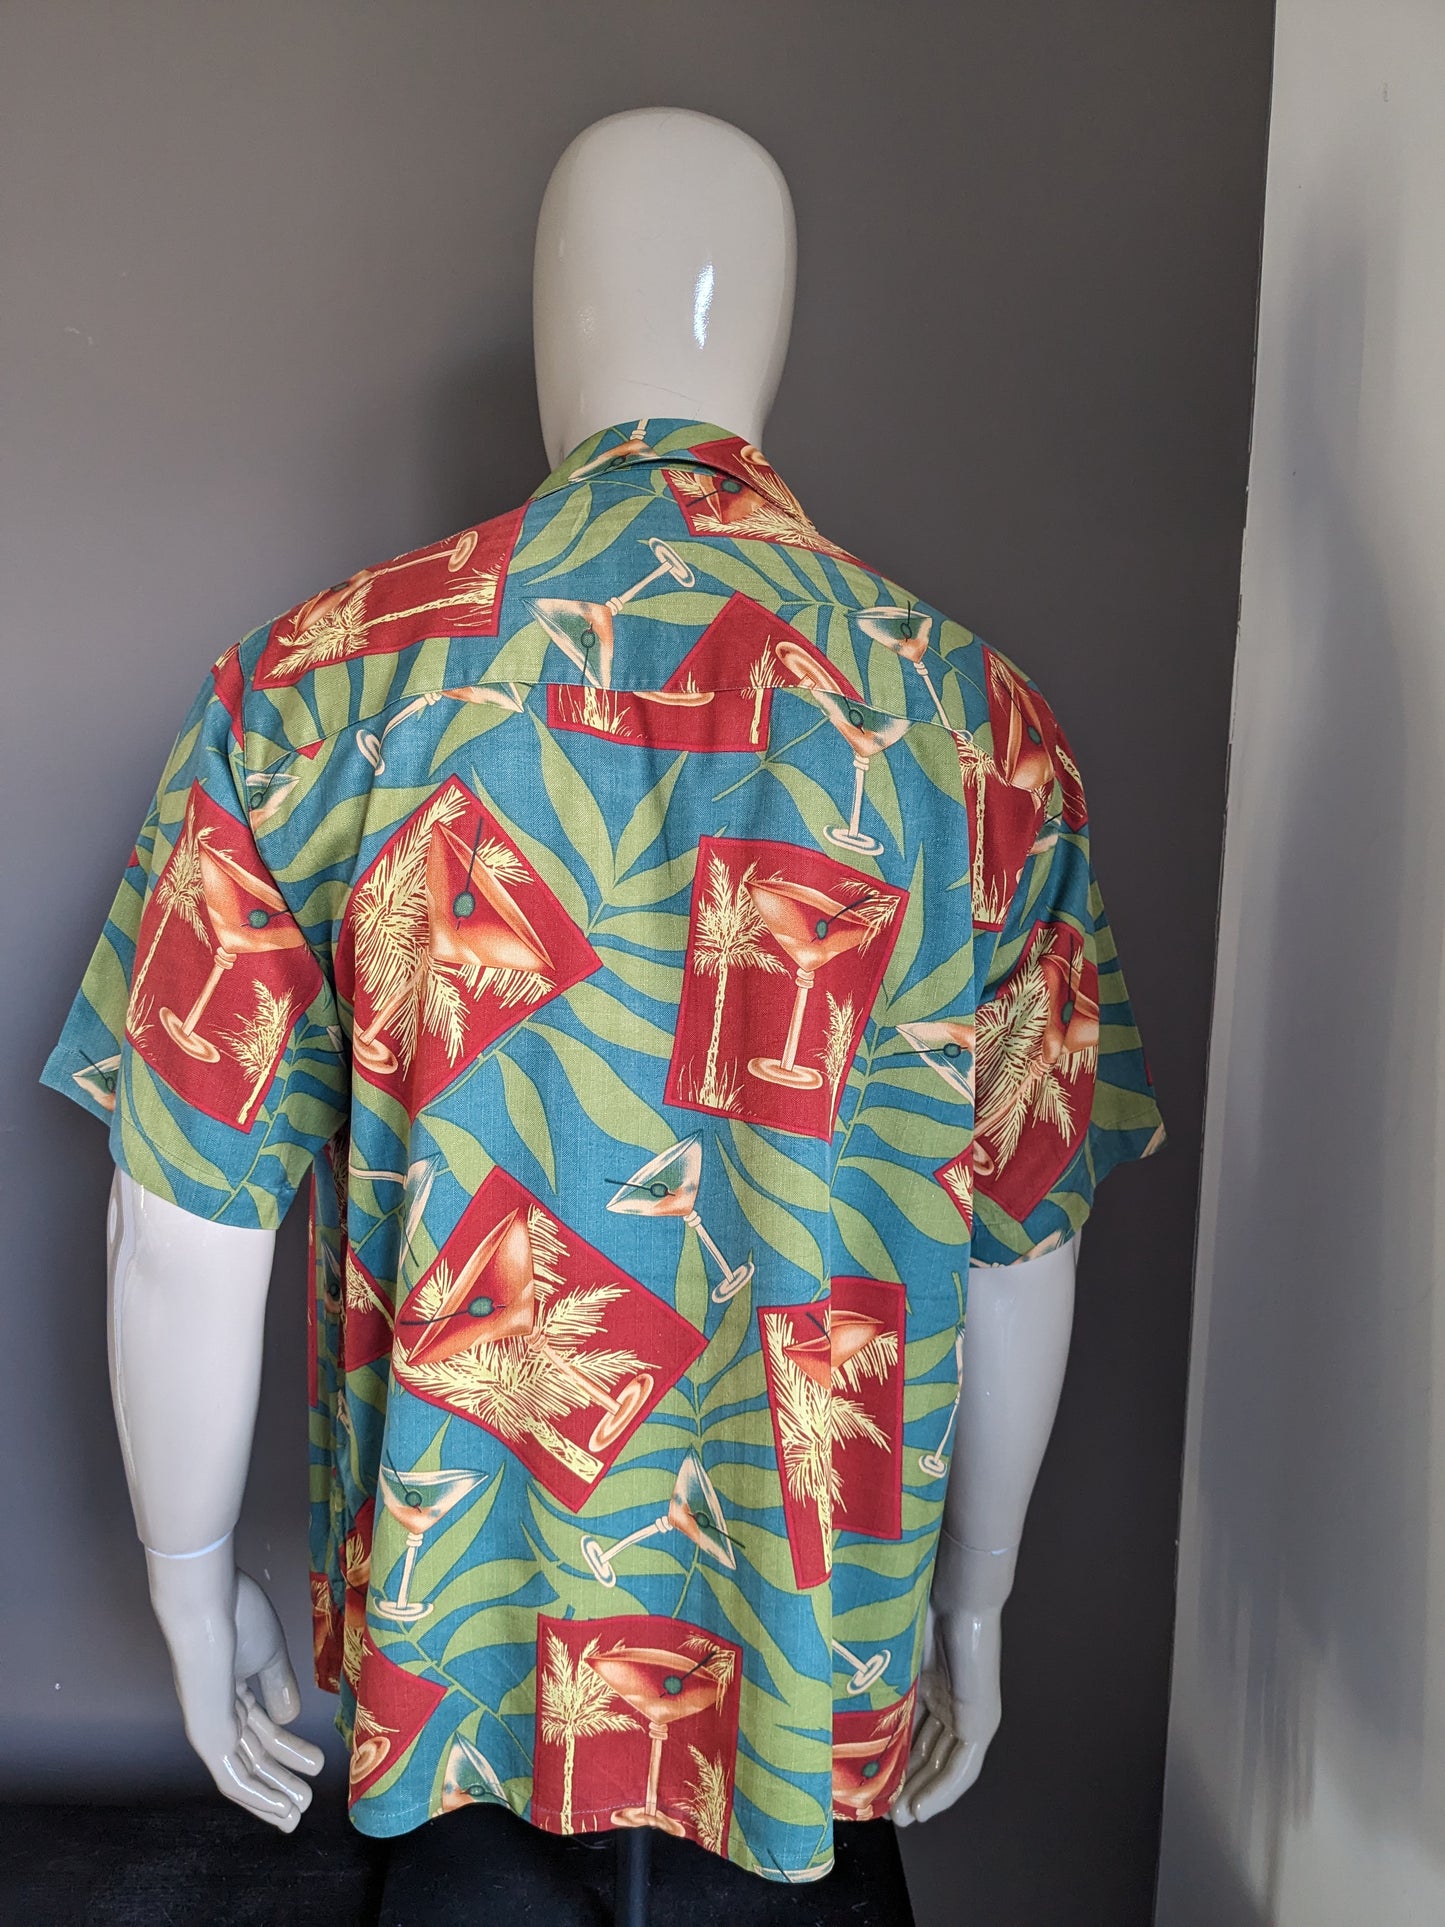 Banana Cabana Original Hawaii Shirt Short Sleeve. Red green blue print. Size L / XL.